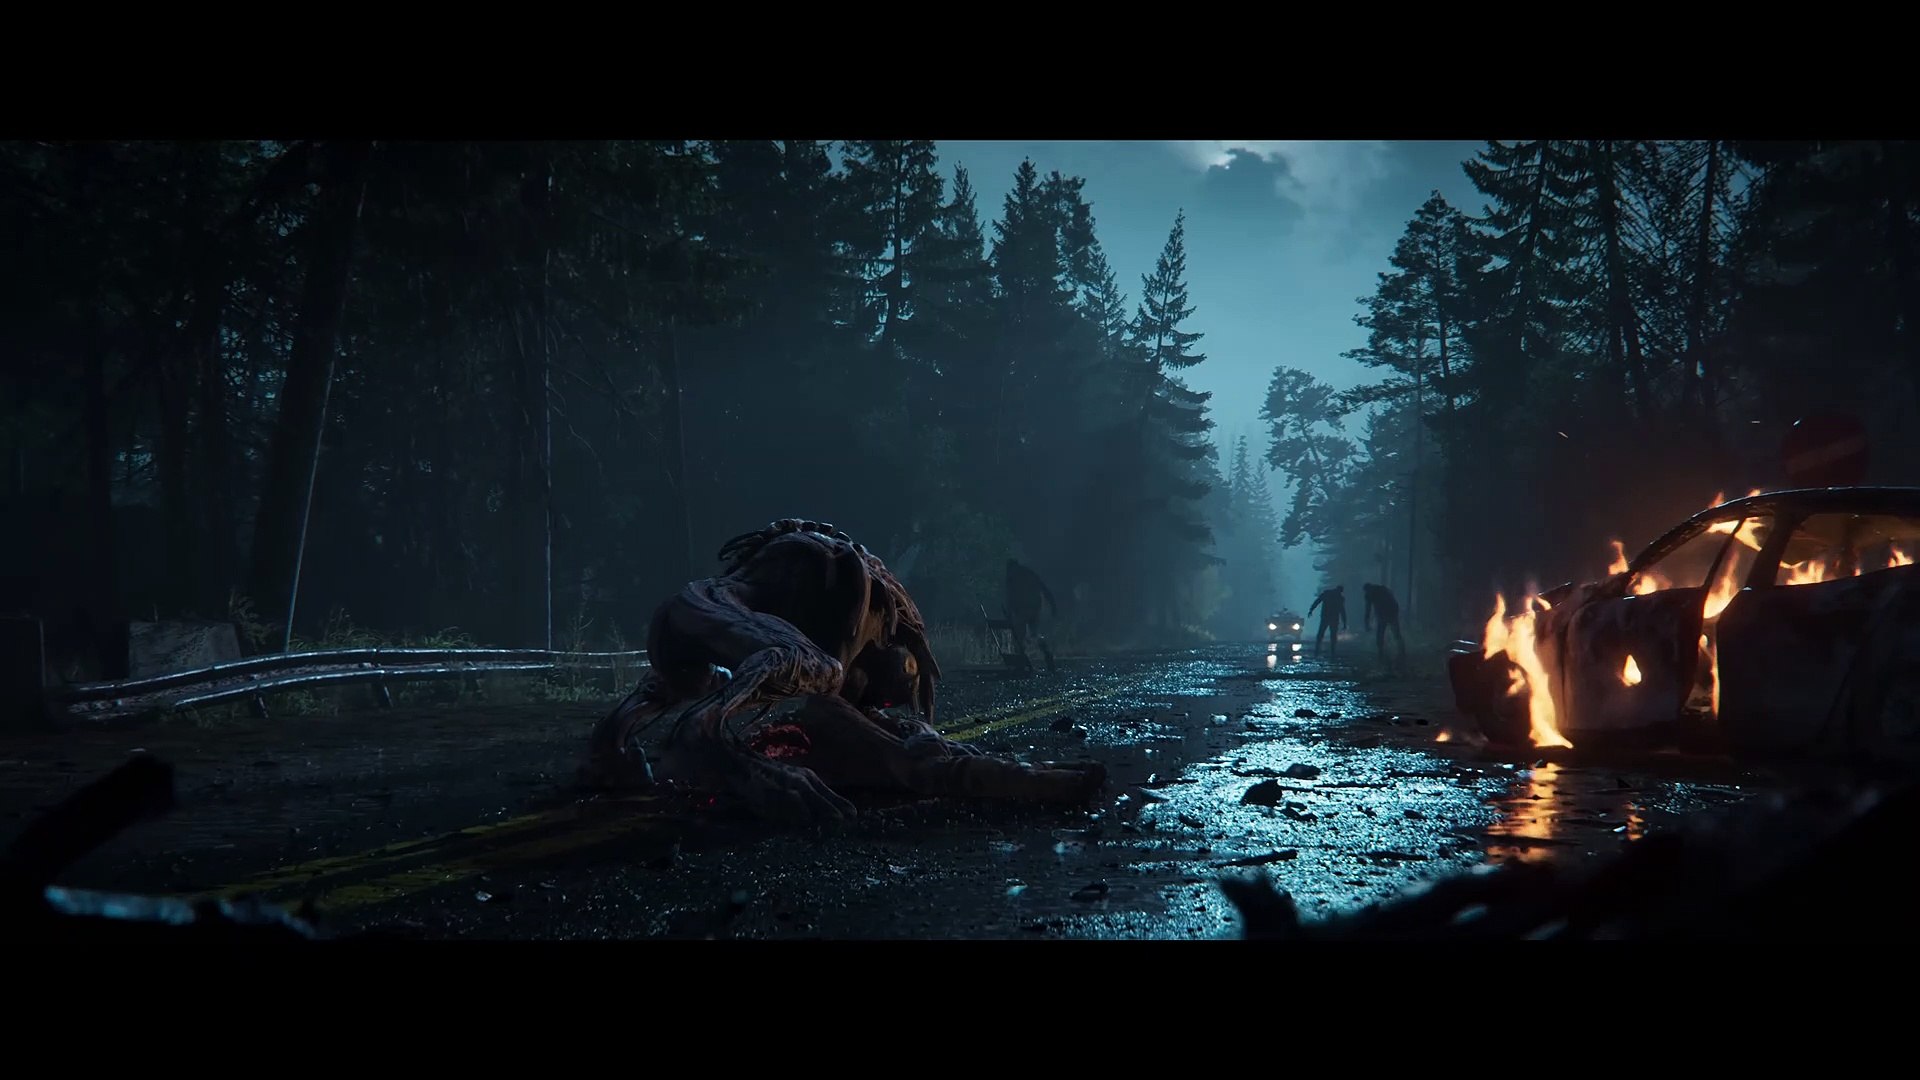 John Carpenter's: Toxic Commando  Official Reveal Trailer - Summer Game  Fest 2023 - video Dailymotion